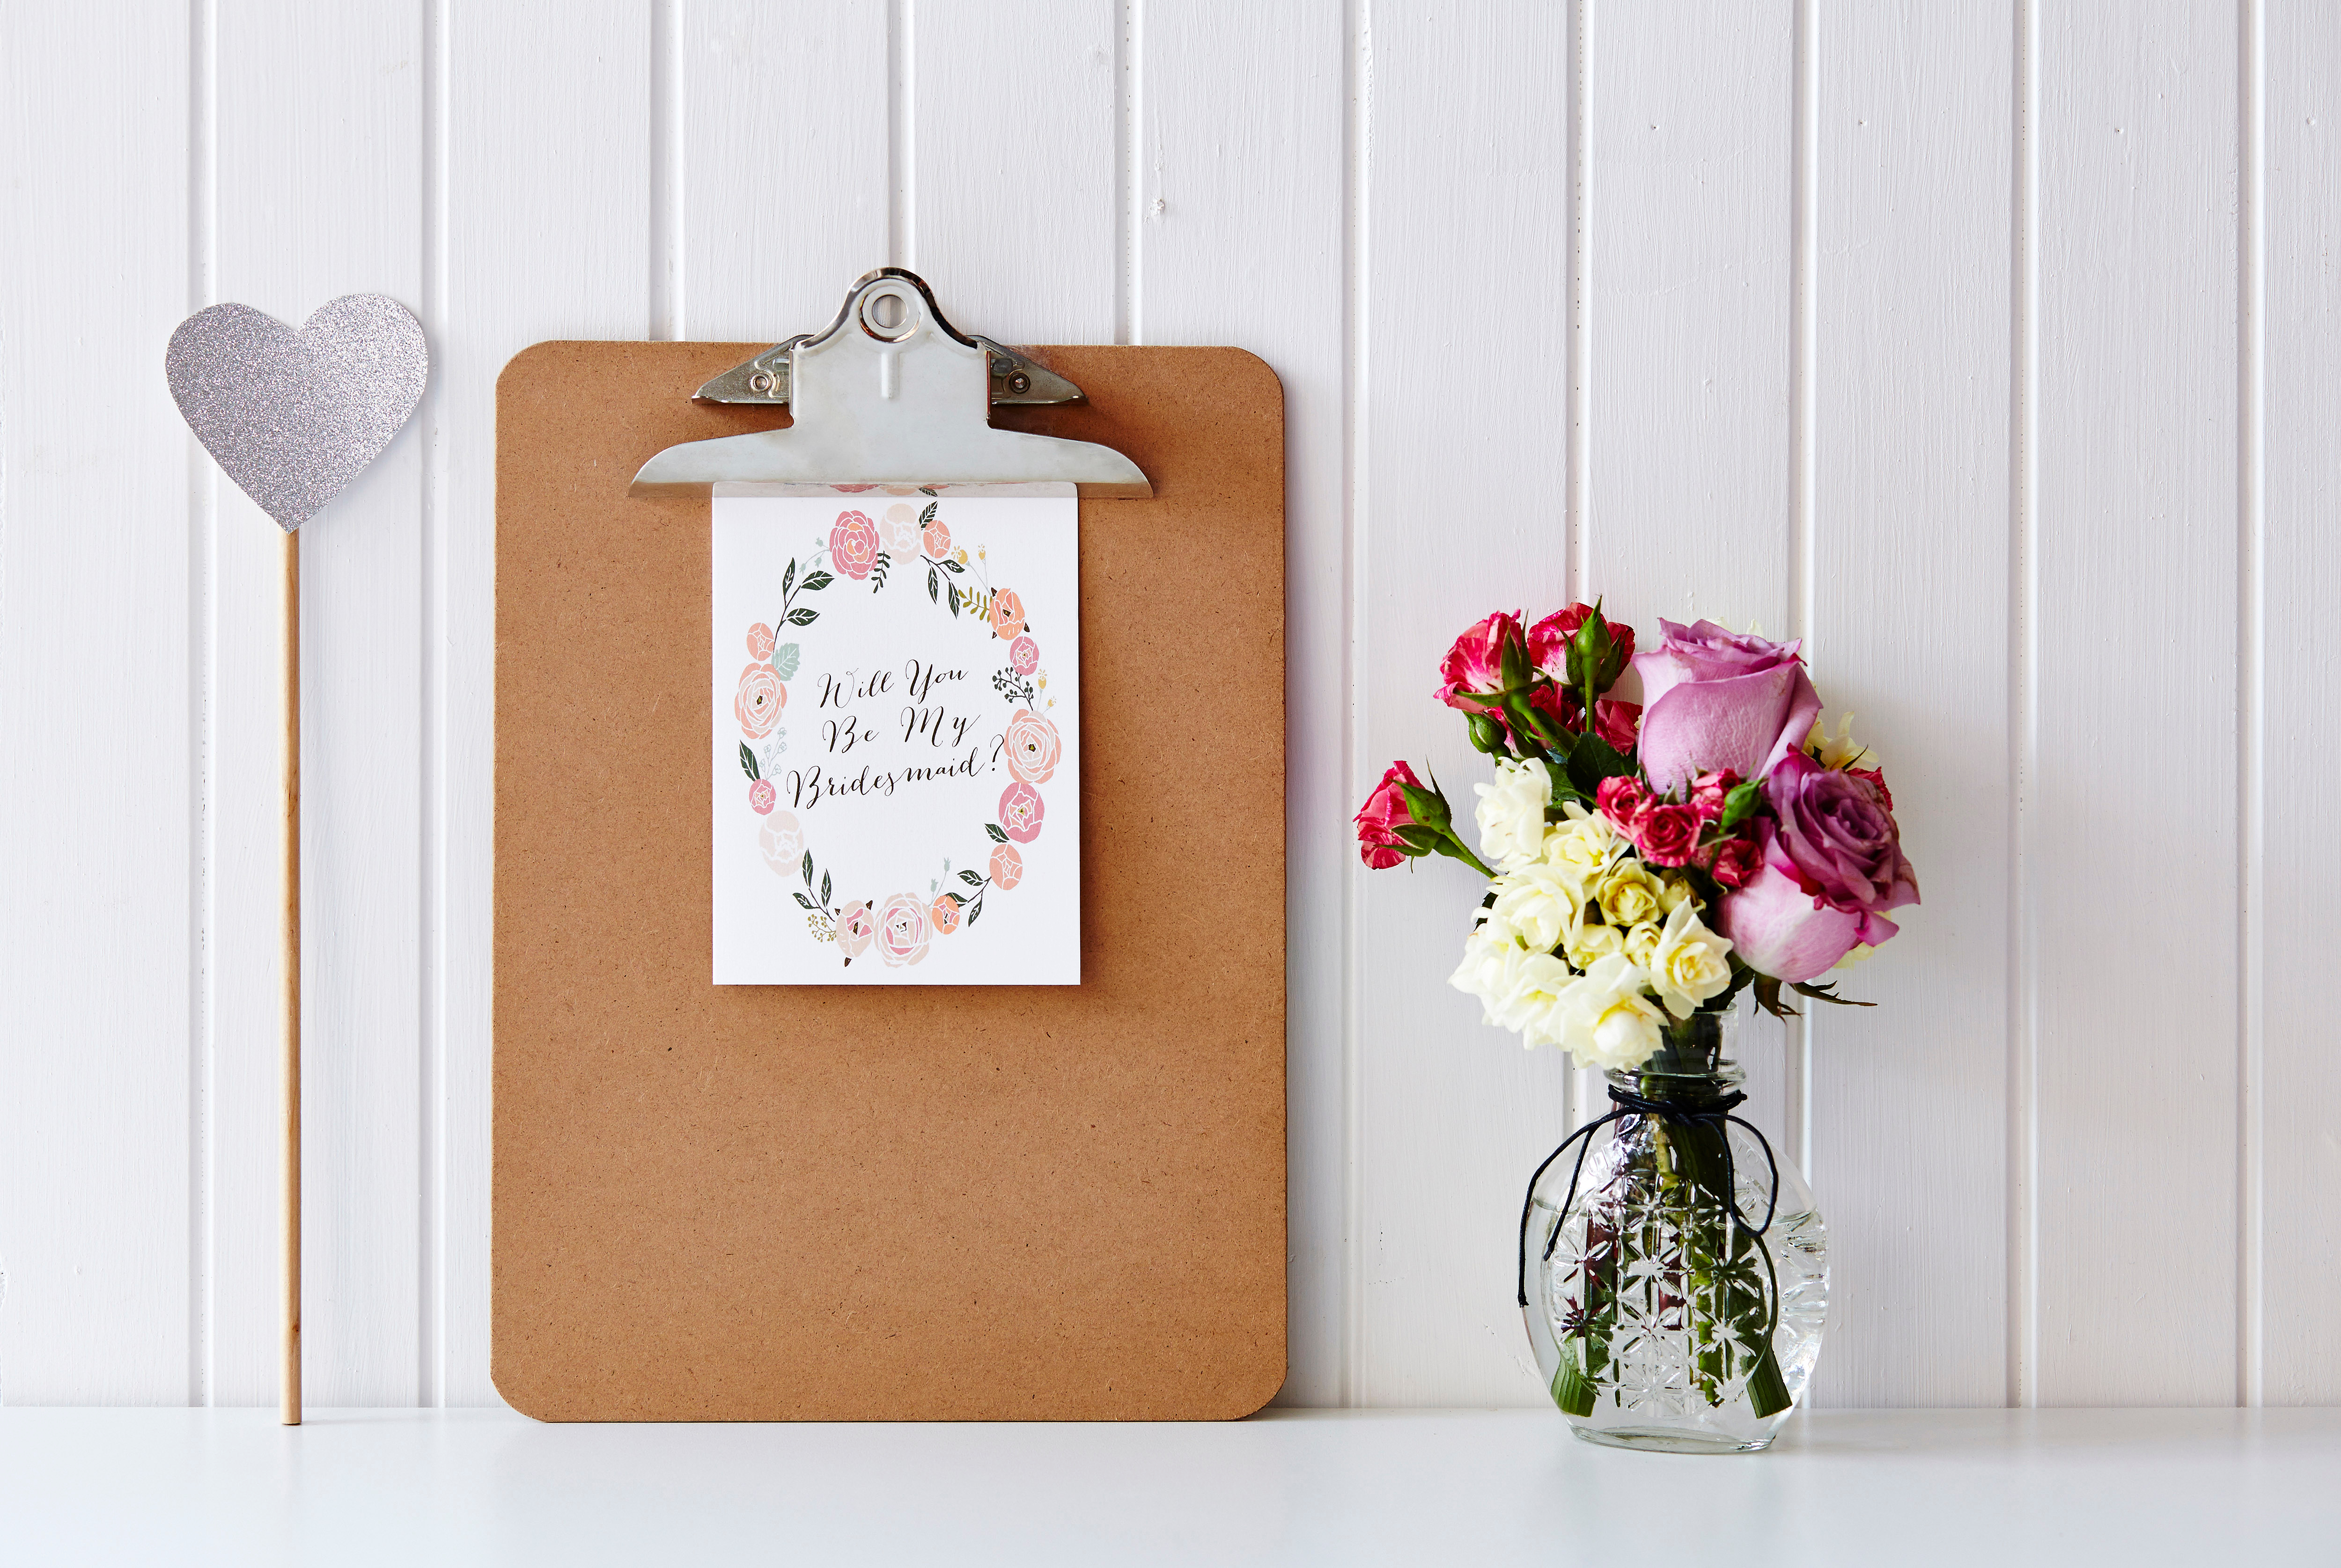 Portapapeles con una tarjeta de dama de honor | Foto: Shutterstock